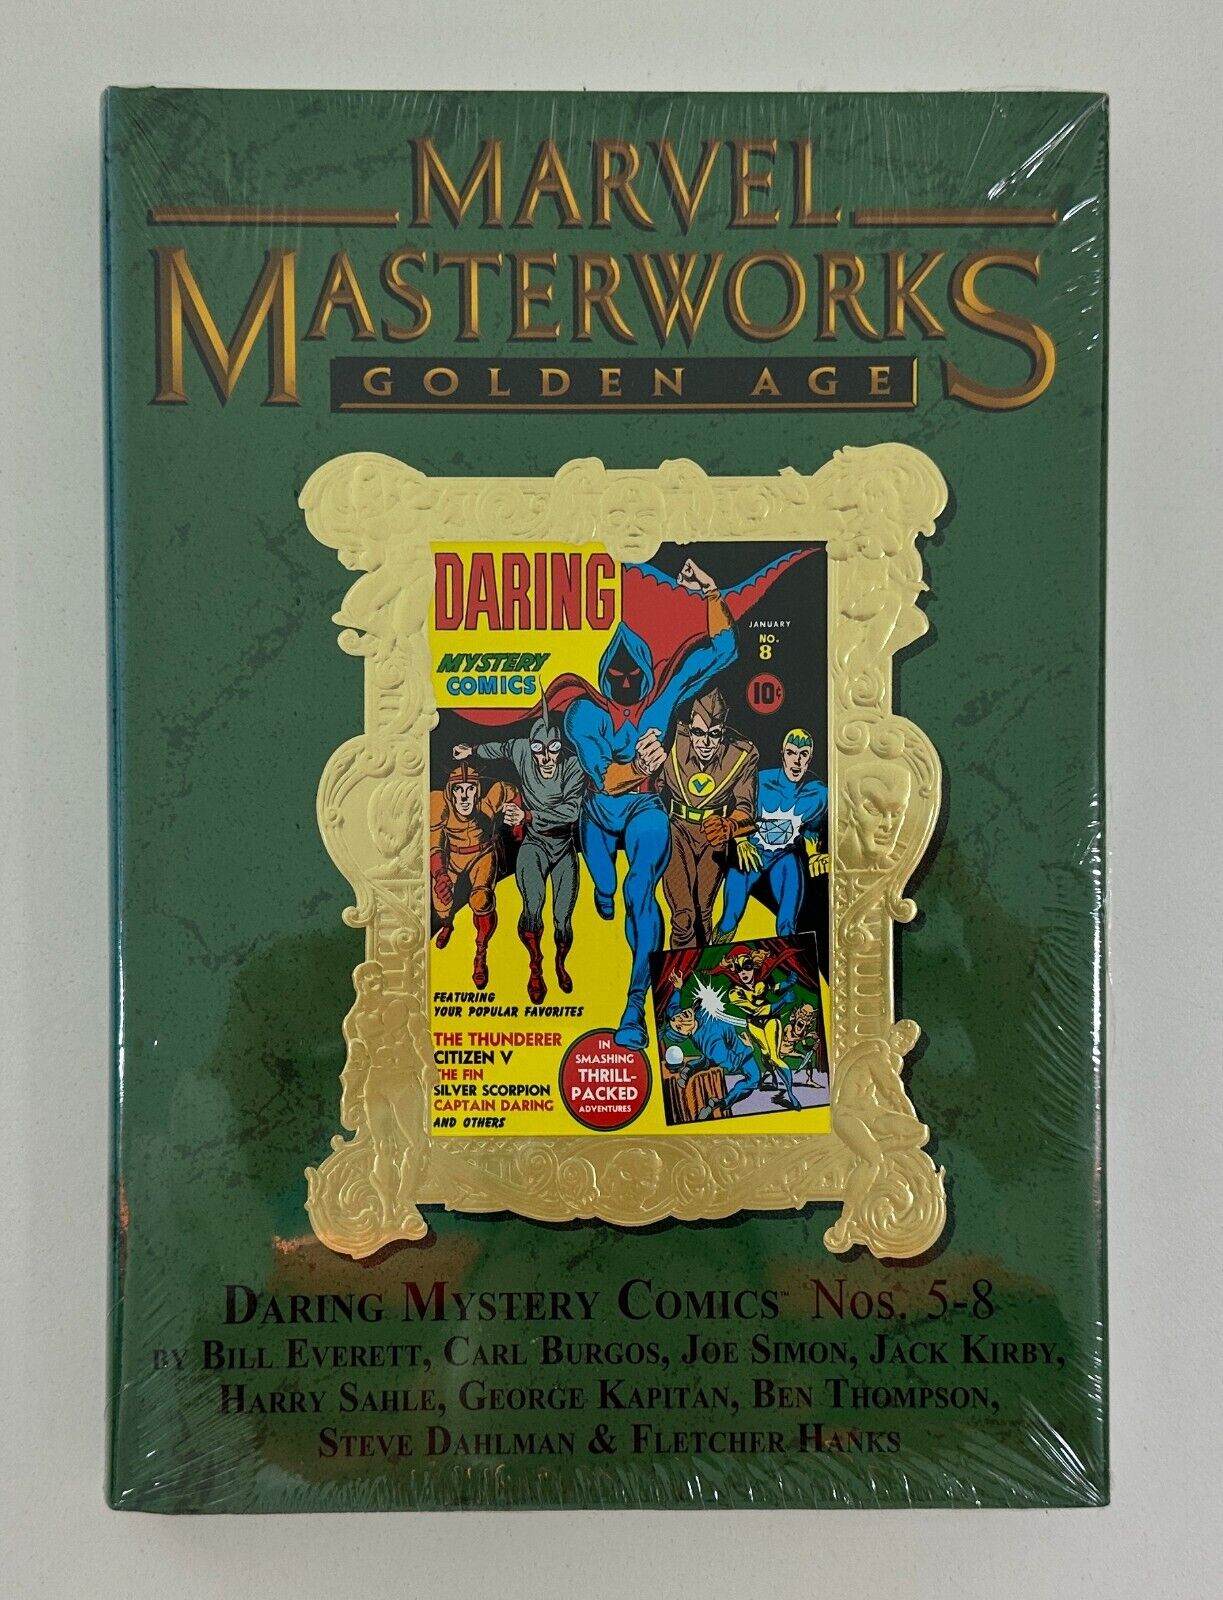 Marvel Masterworks Golden Age Daring Mystery Comics Vol. 133 NEW #66A